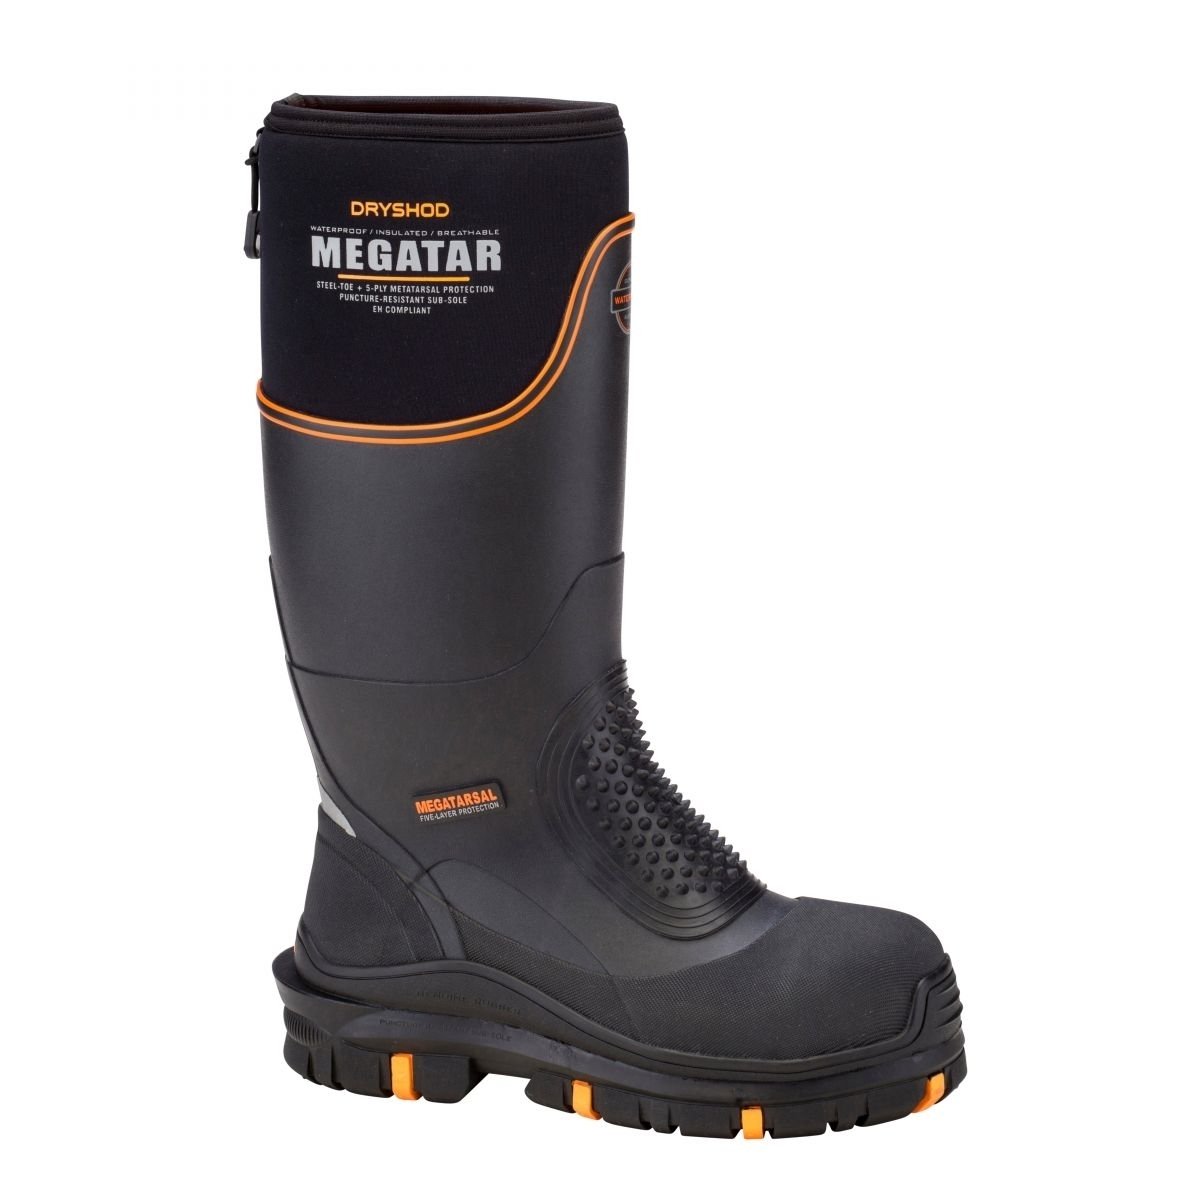 Dryshod Men's Megatar Steel Toe Metatarsal Guard Work Boot Black - MEG-MH-BK ONE SIZE BLACK/ORANGE - BLACK/ORANGE, 7